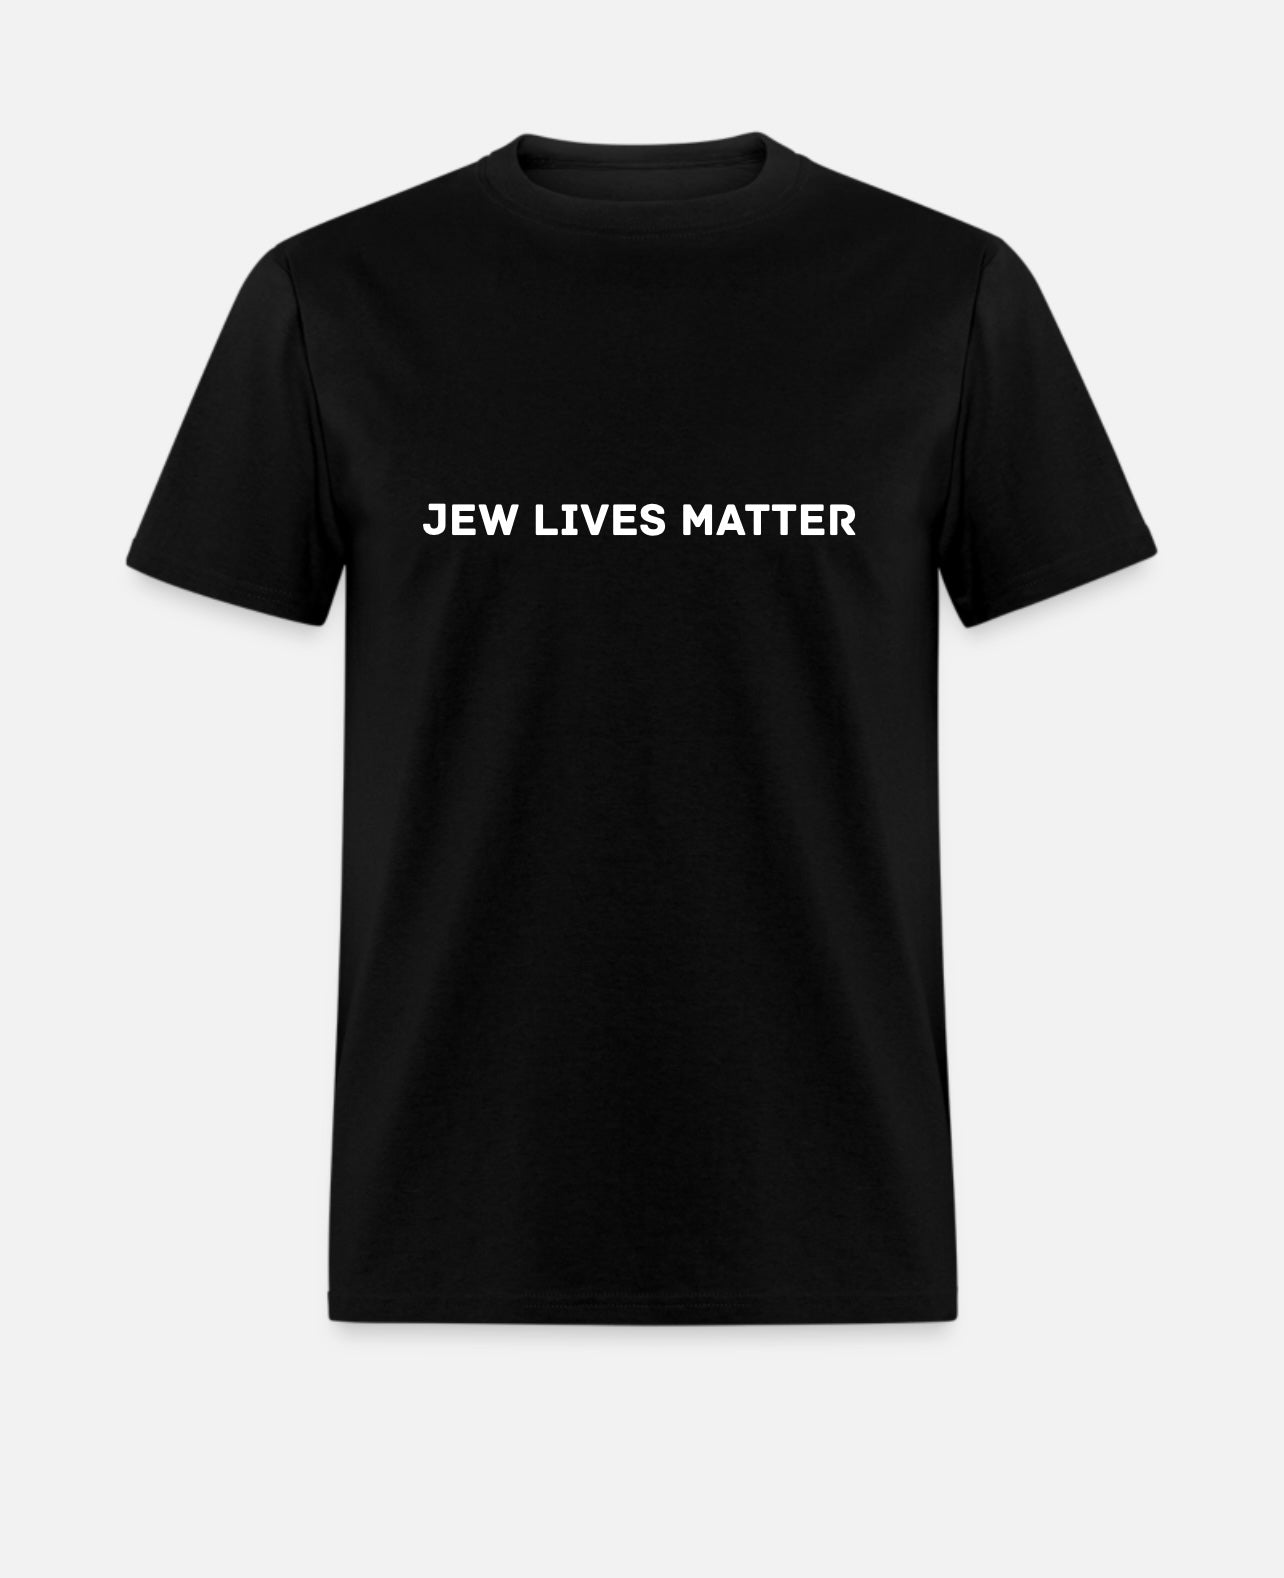 Jew Lives Matter